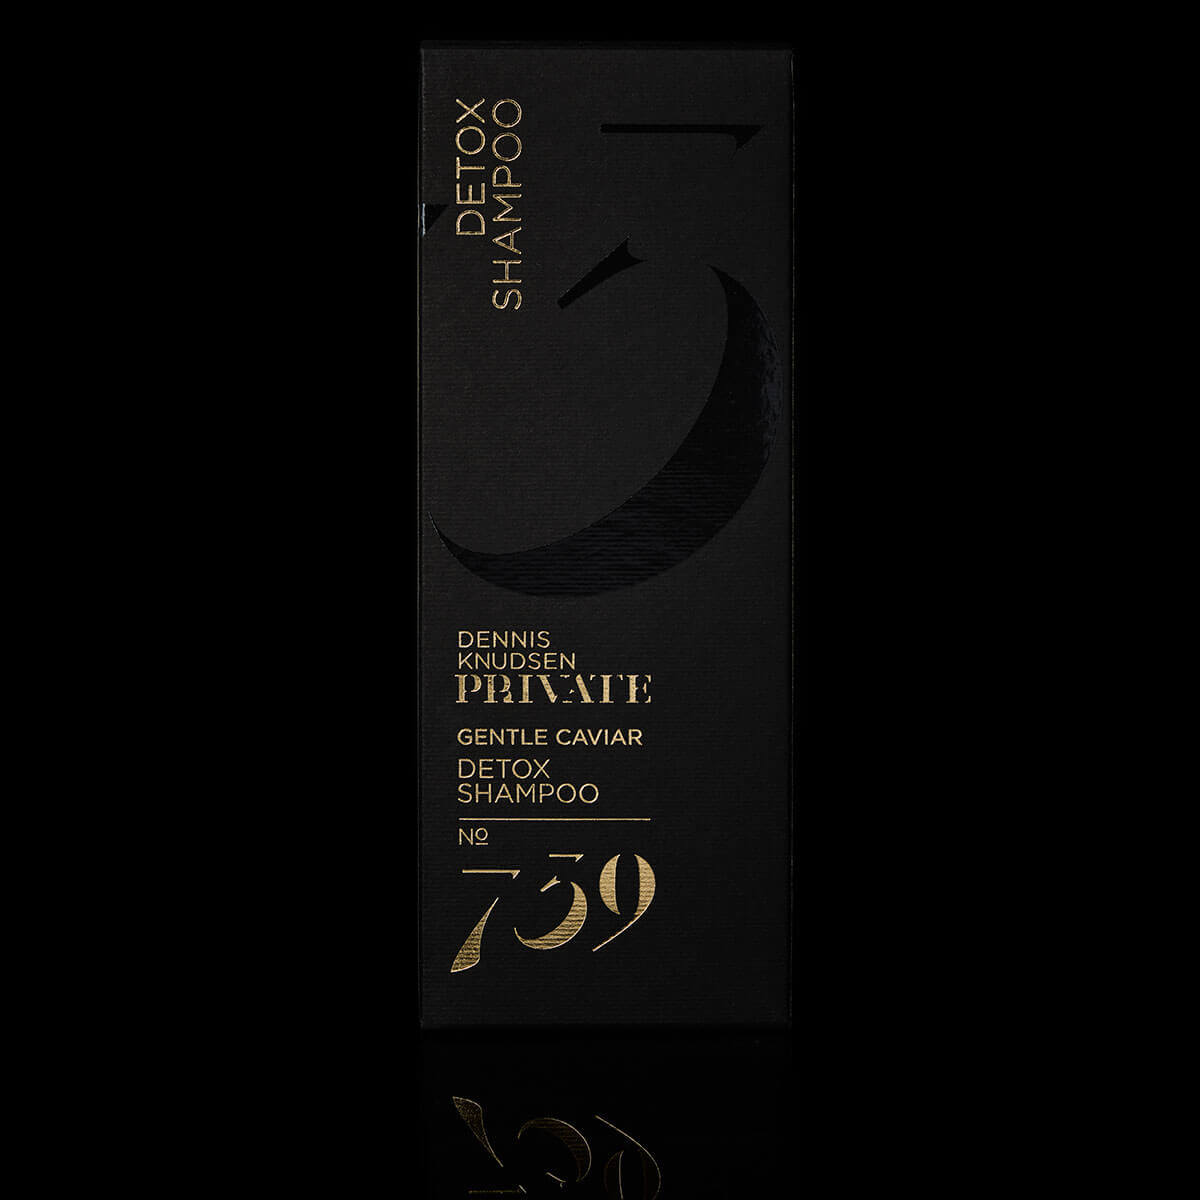 gentle caviar detox shampoo 739 dennis knudsen private box